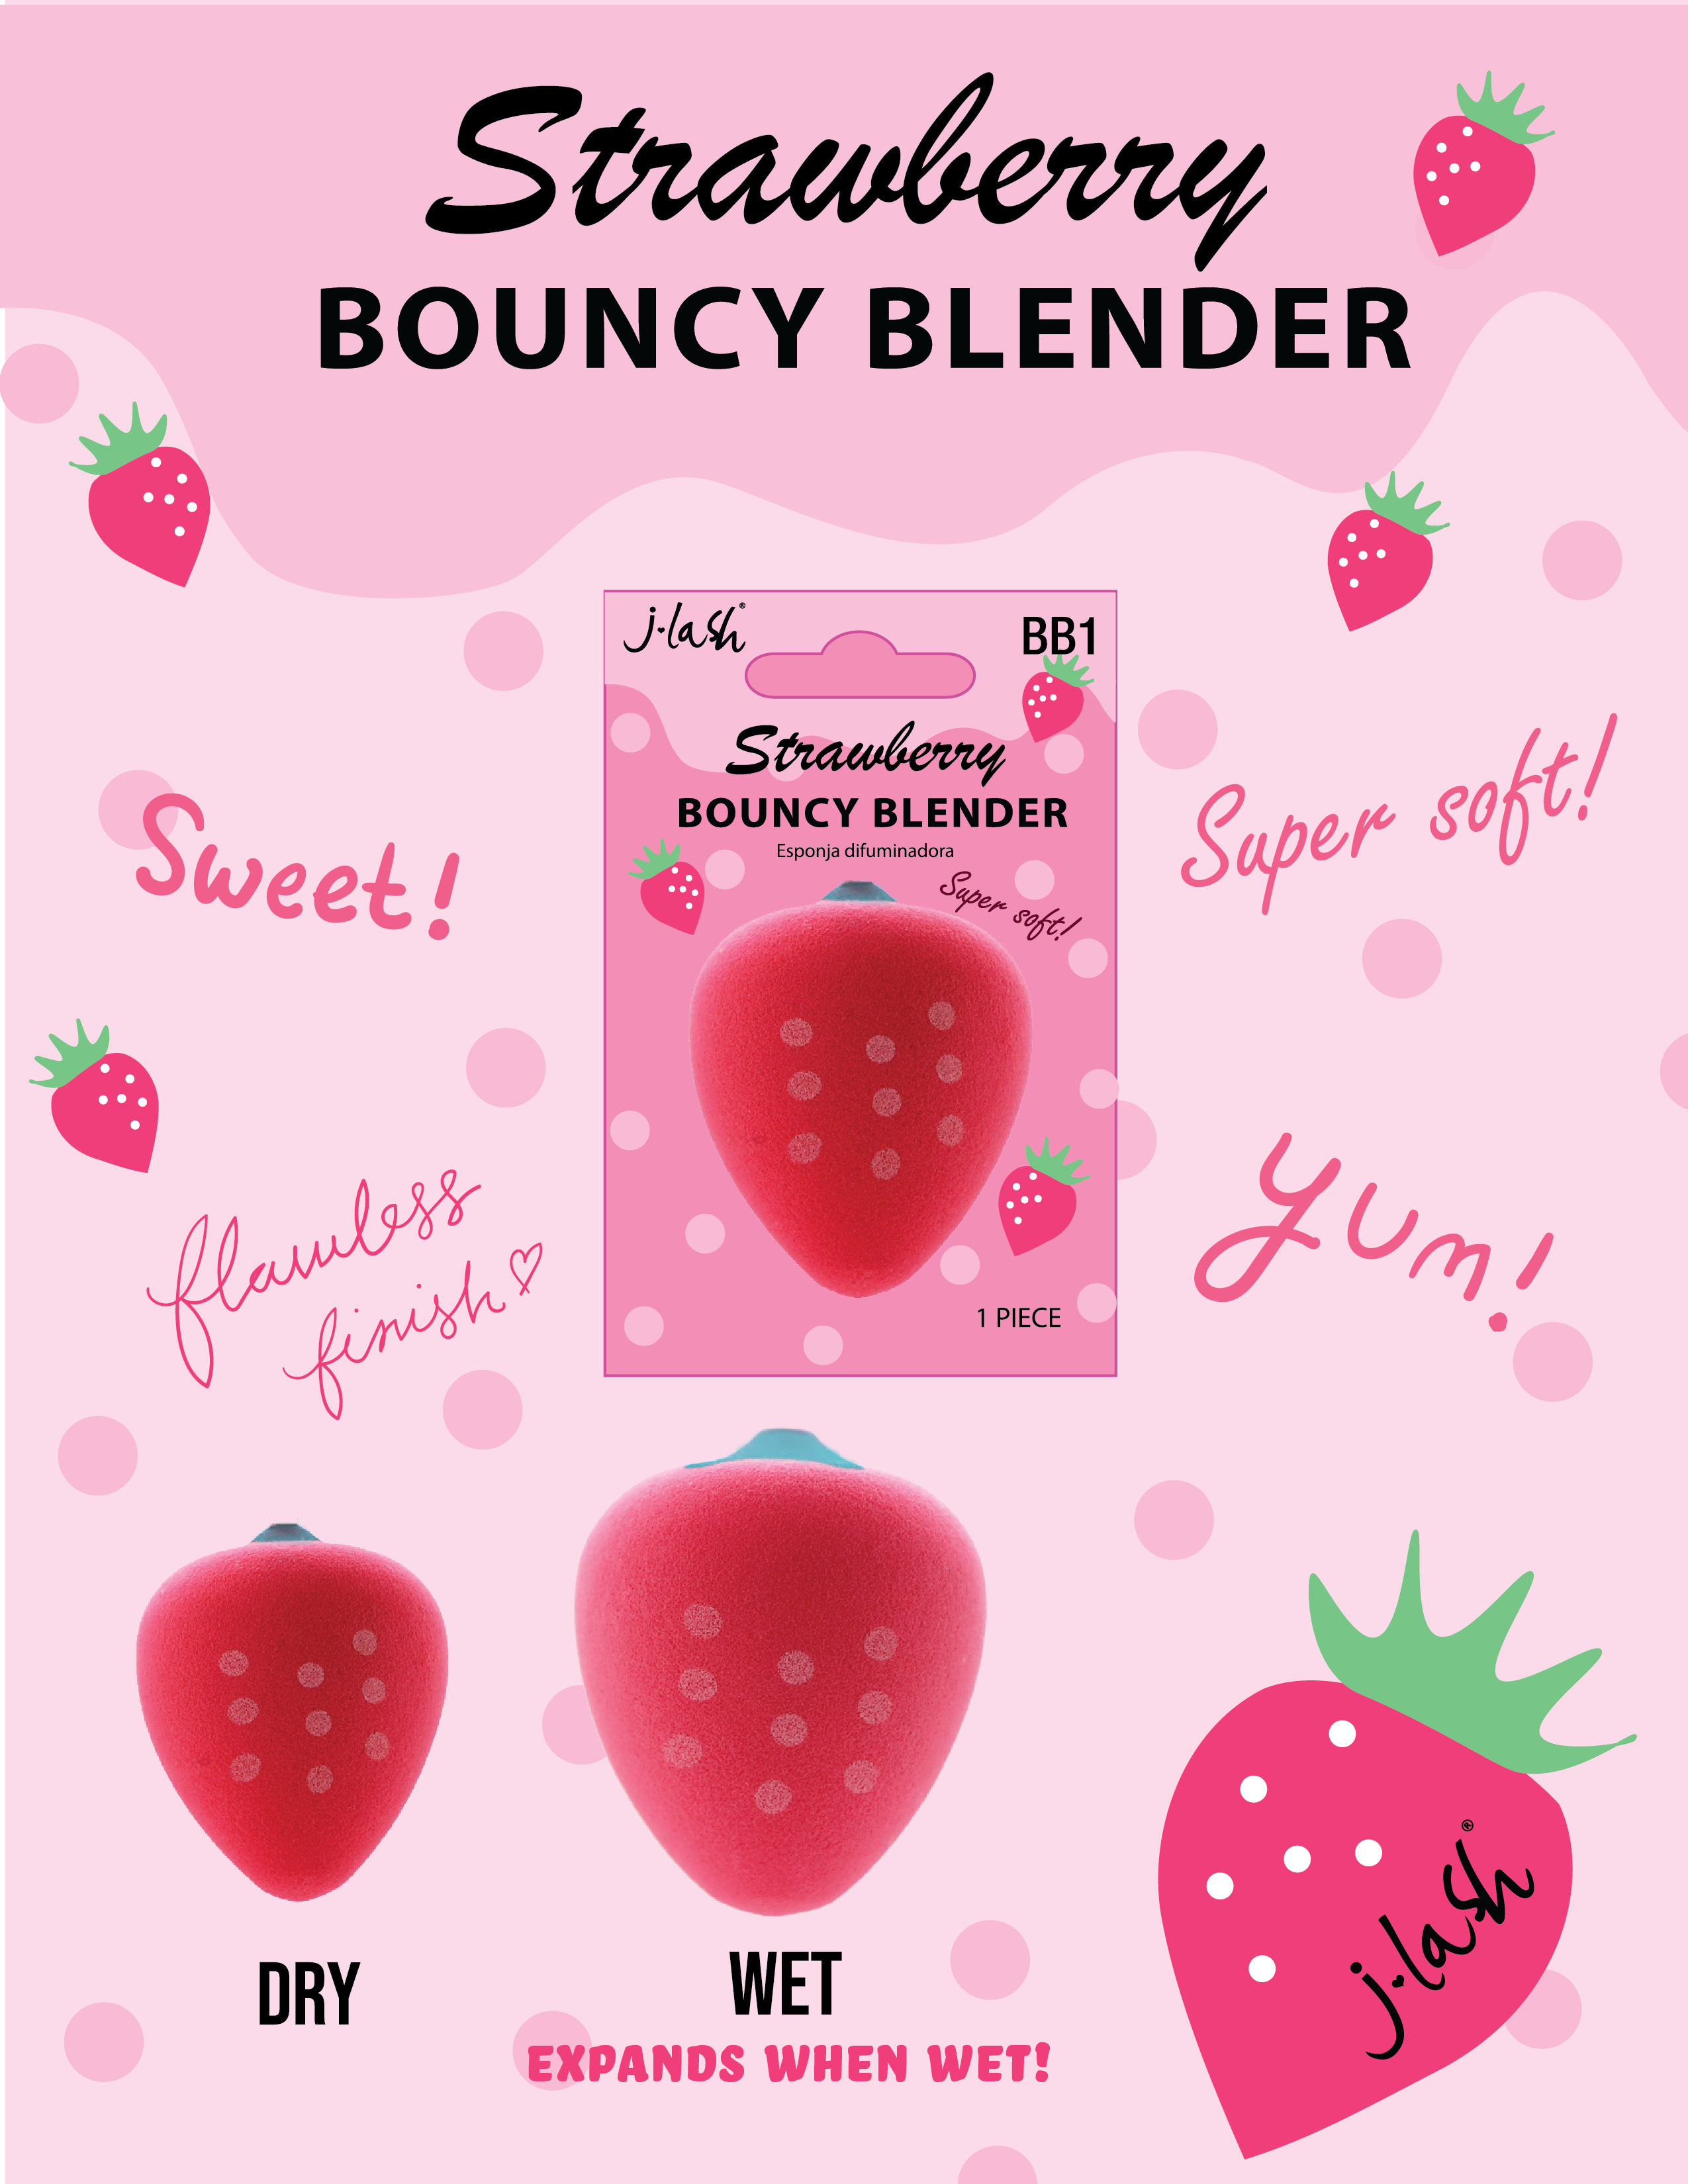 strawberry-bouncy-blender-flyer.png